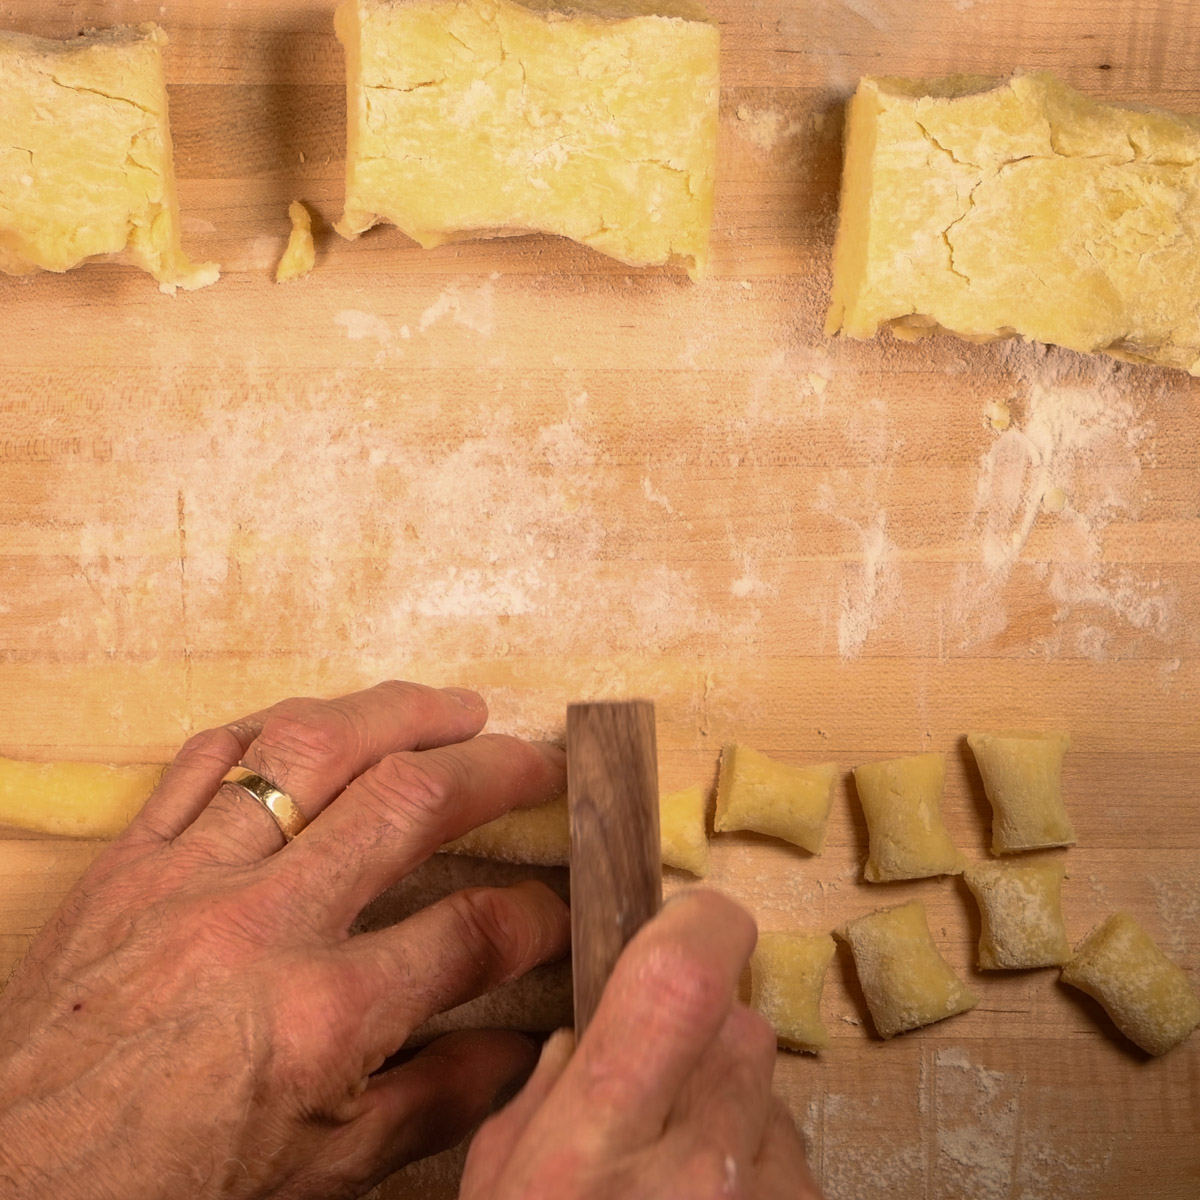 Roll each piece of dough into a ¾" strand.